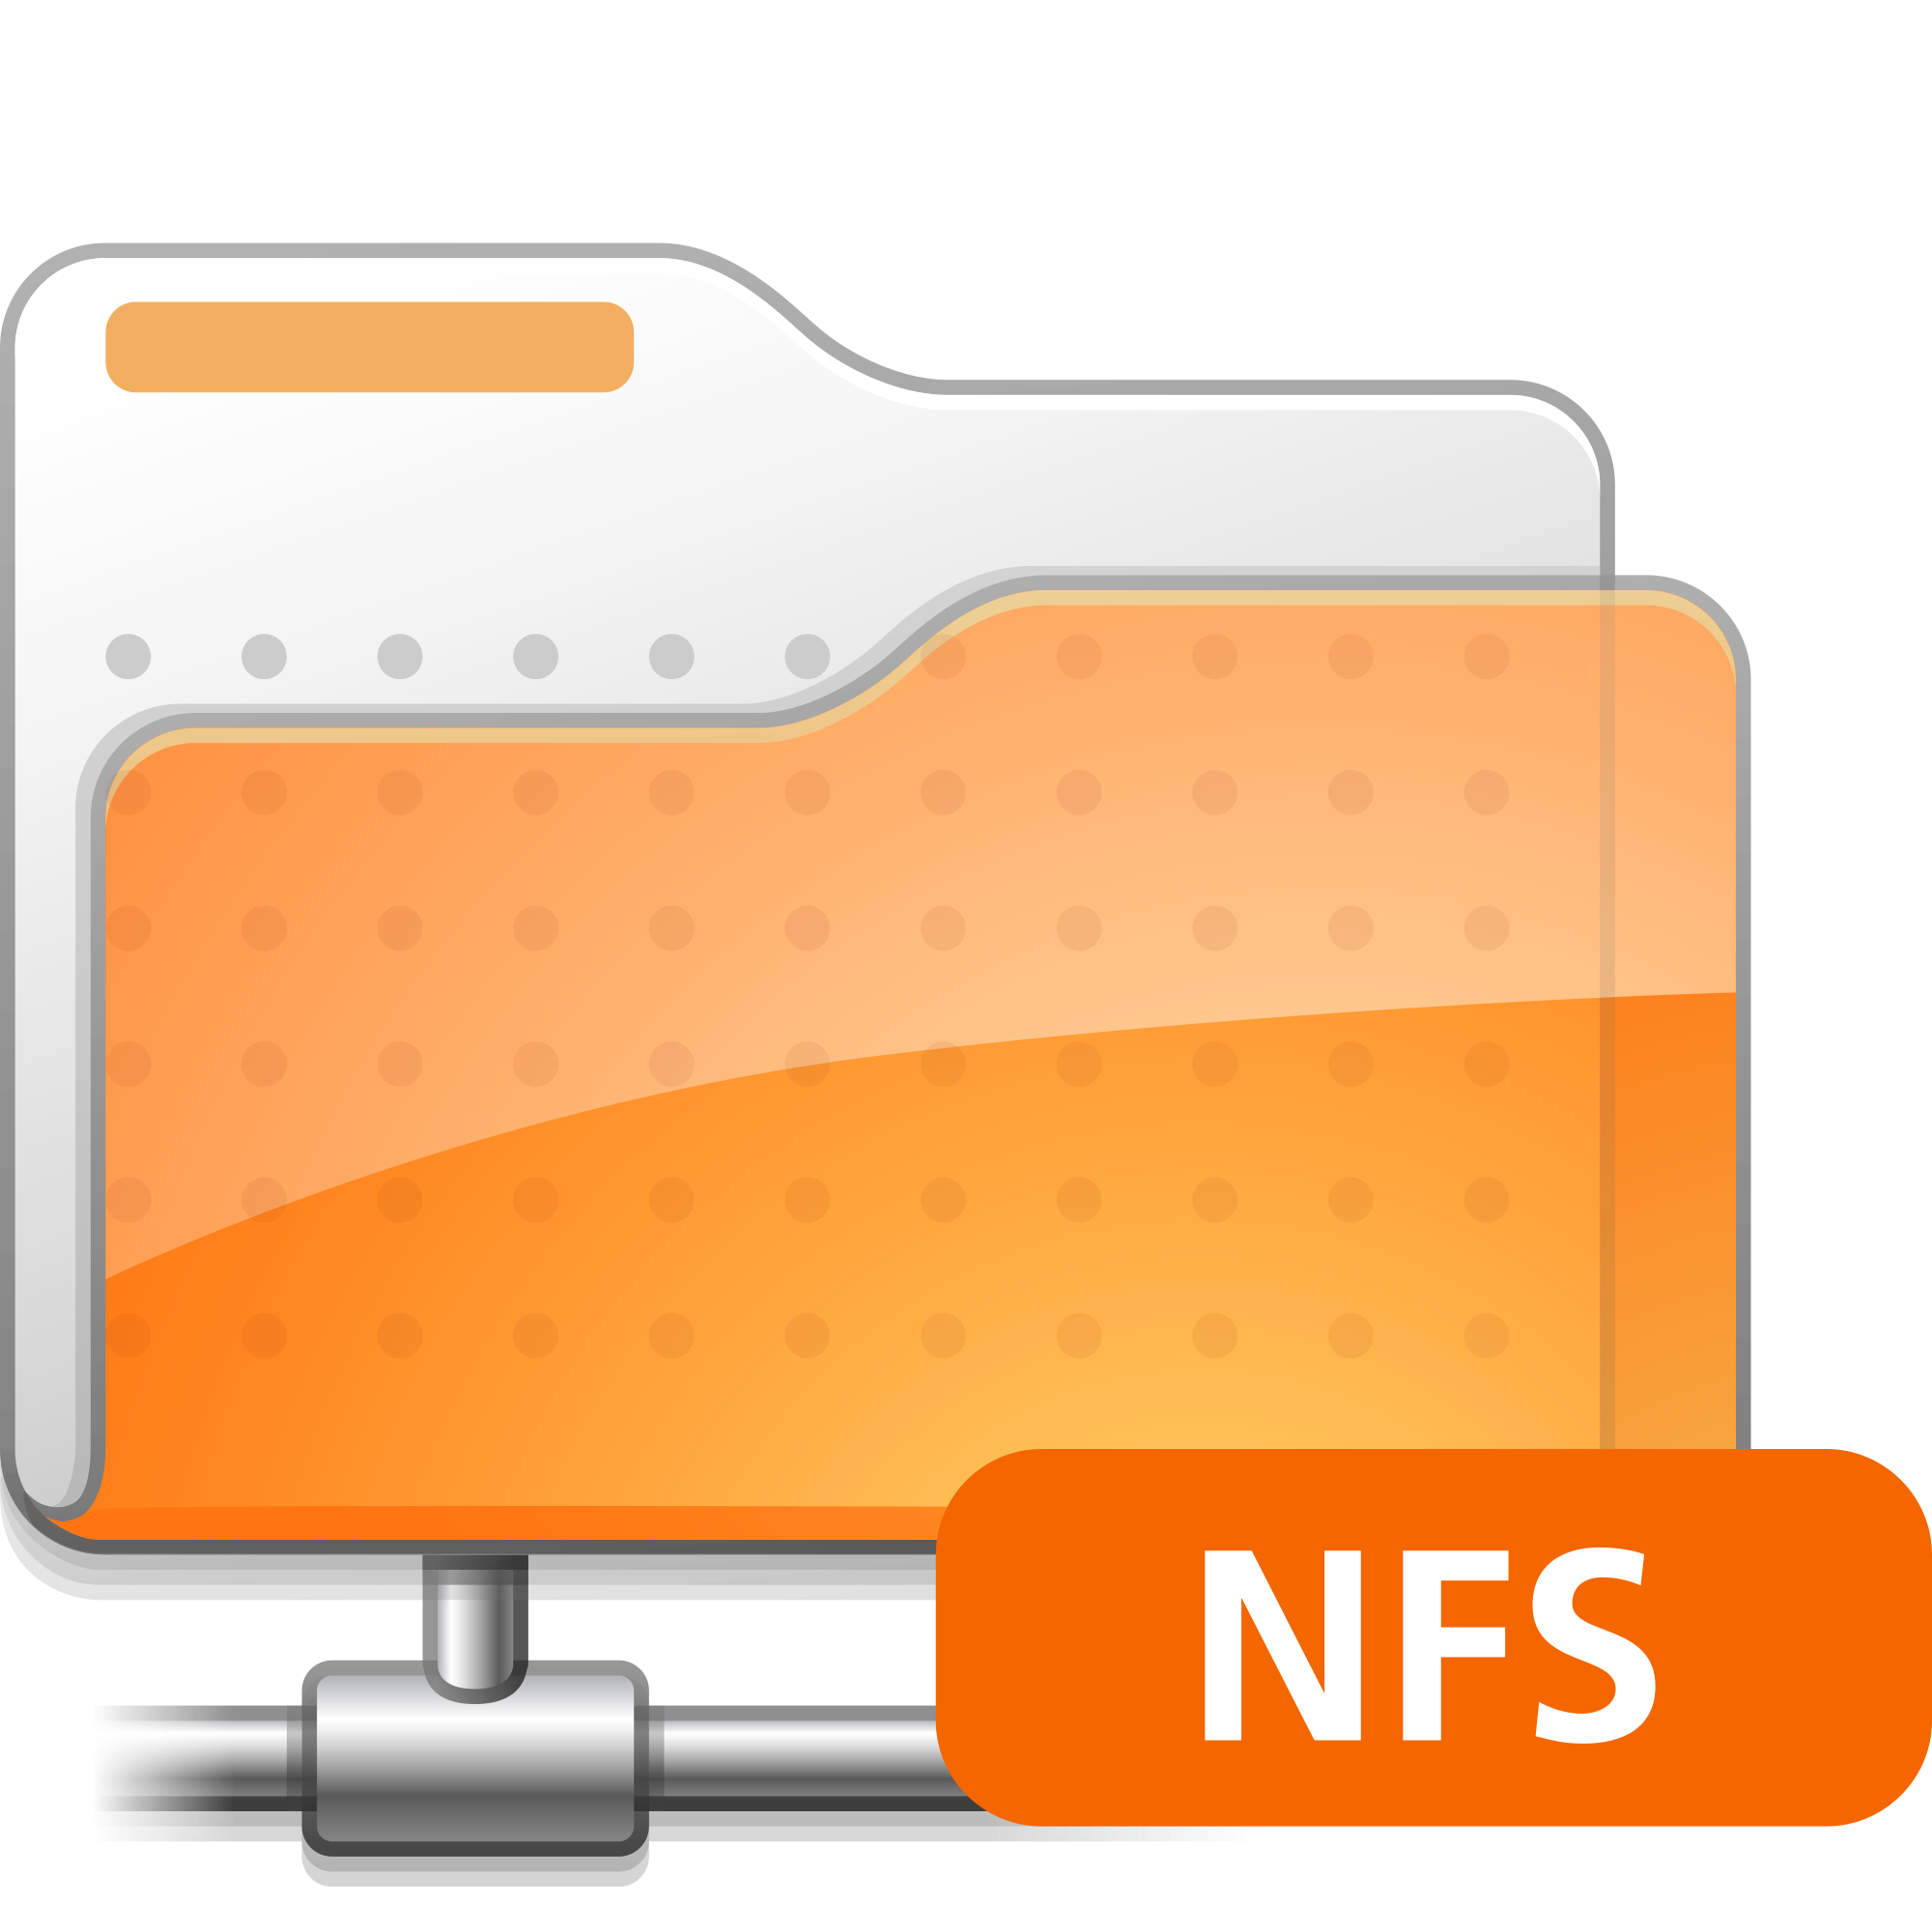 NFS Shares in Linux automatisch beim Booten mounten